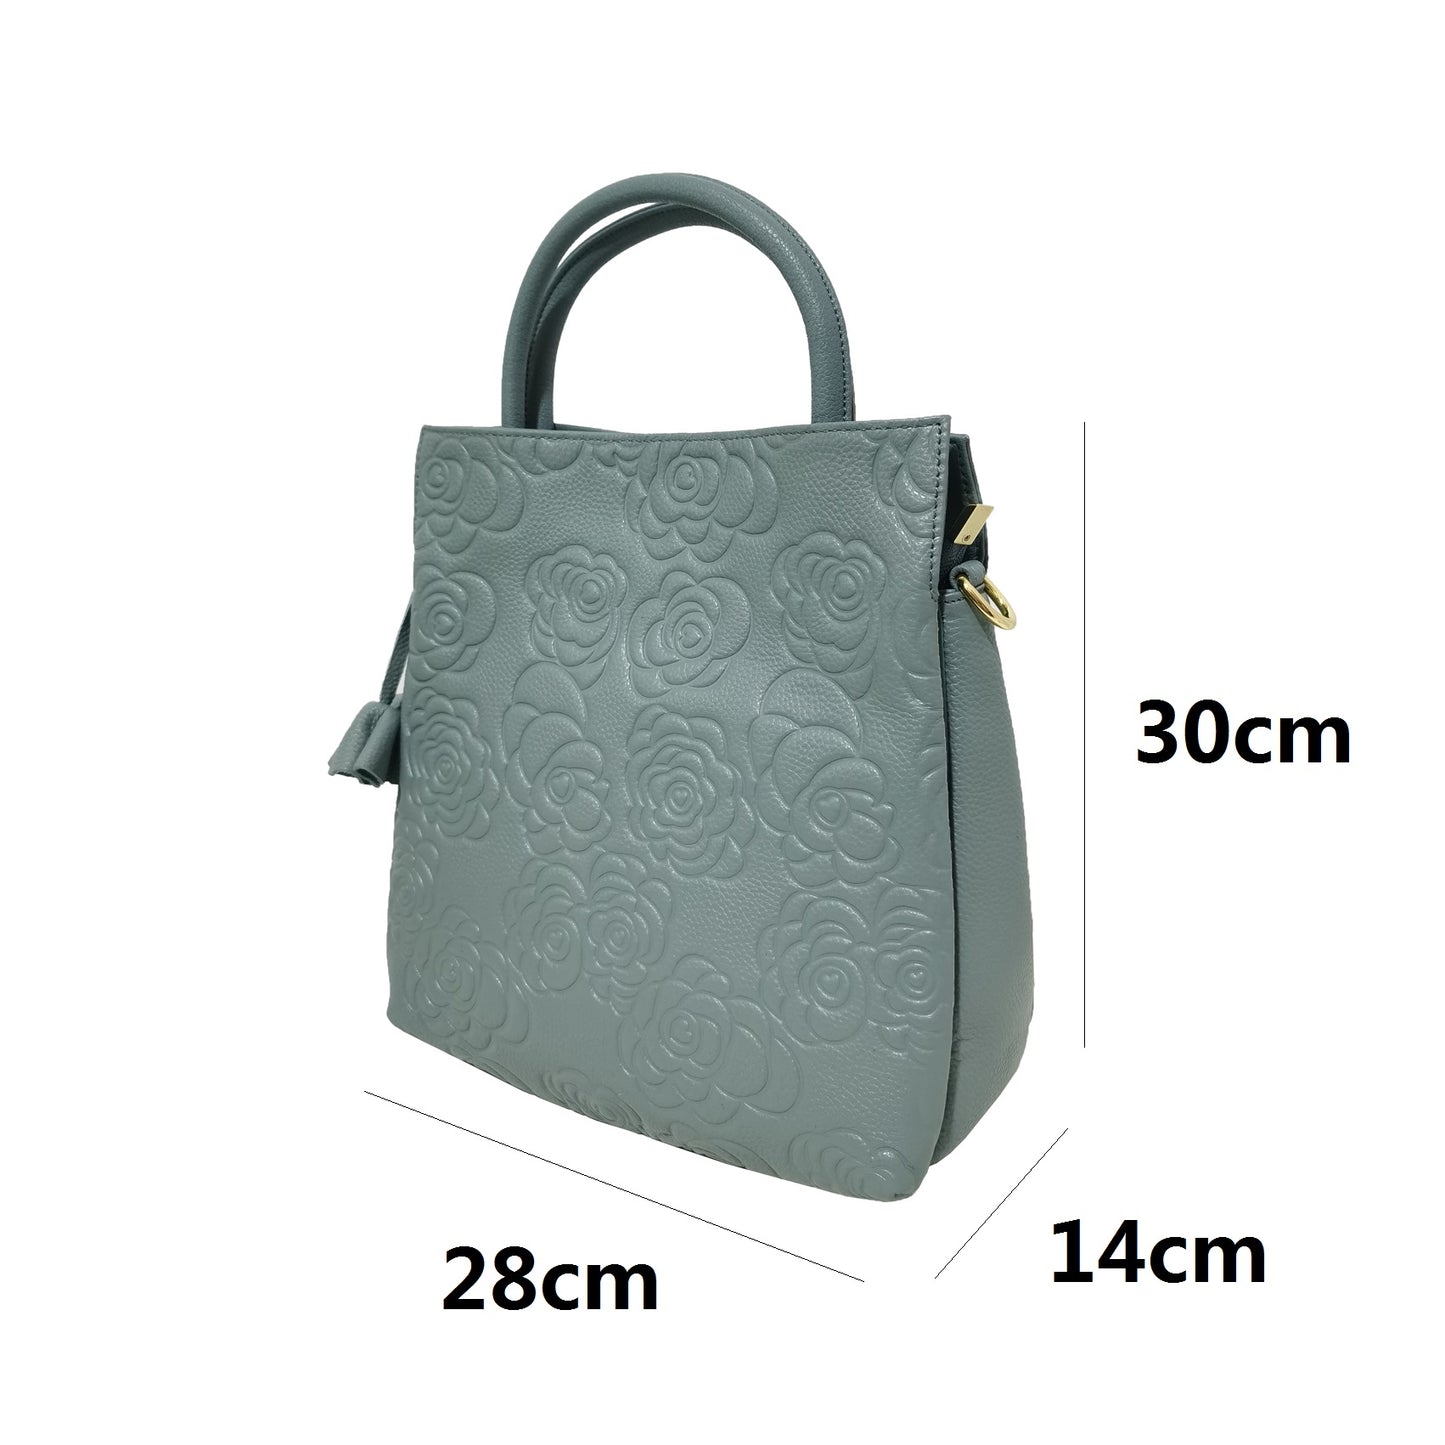 Women's genuine cowhide leather handbag Kriz design in floral print